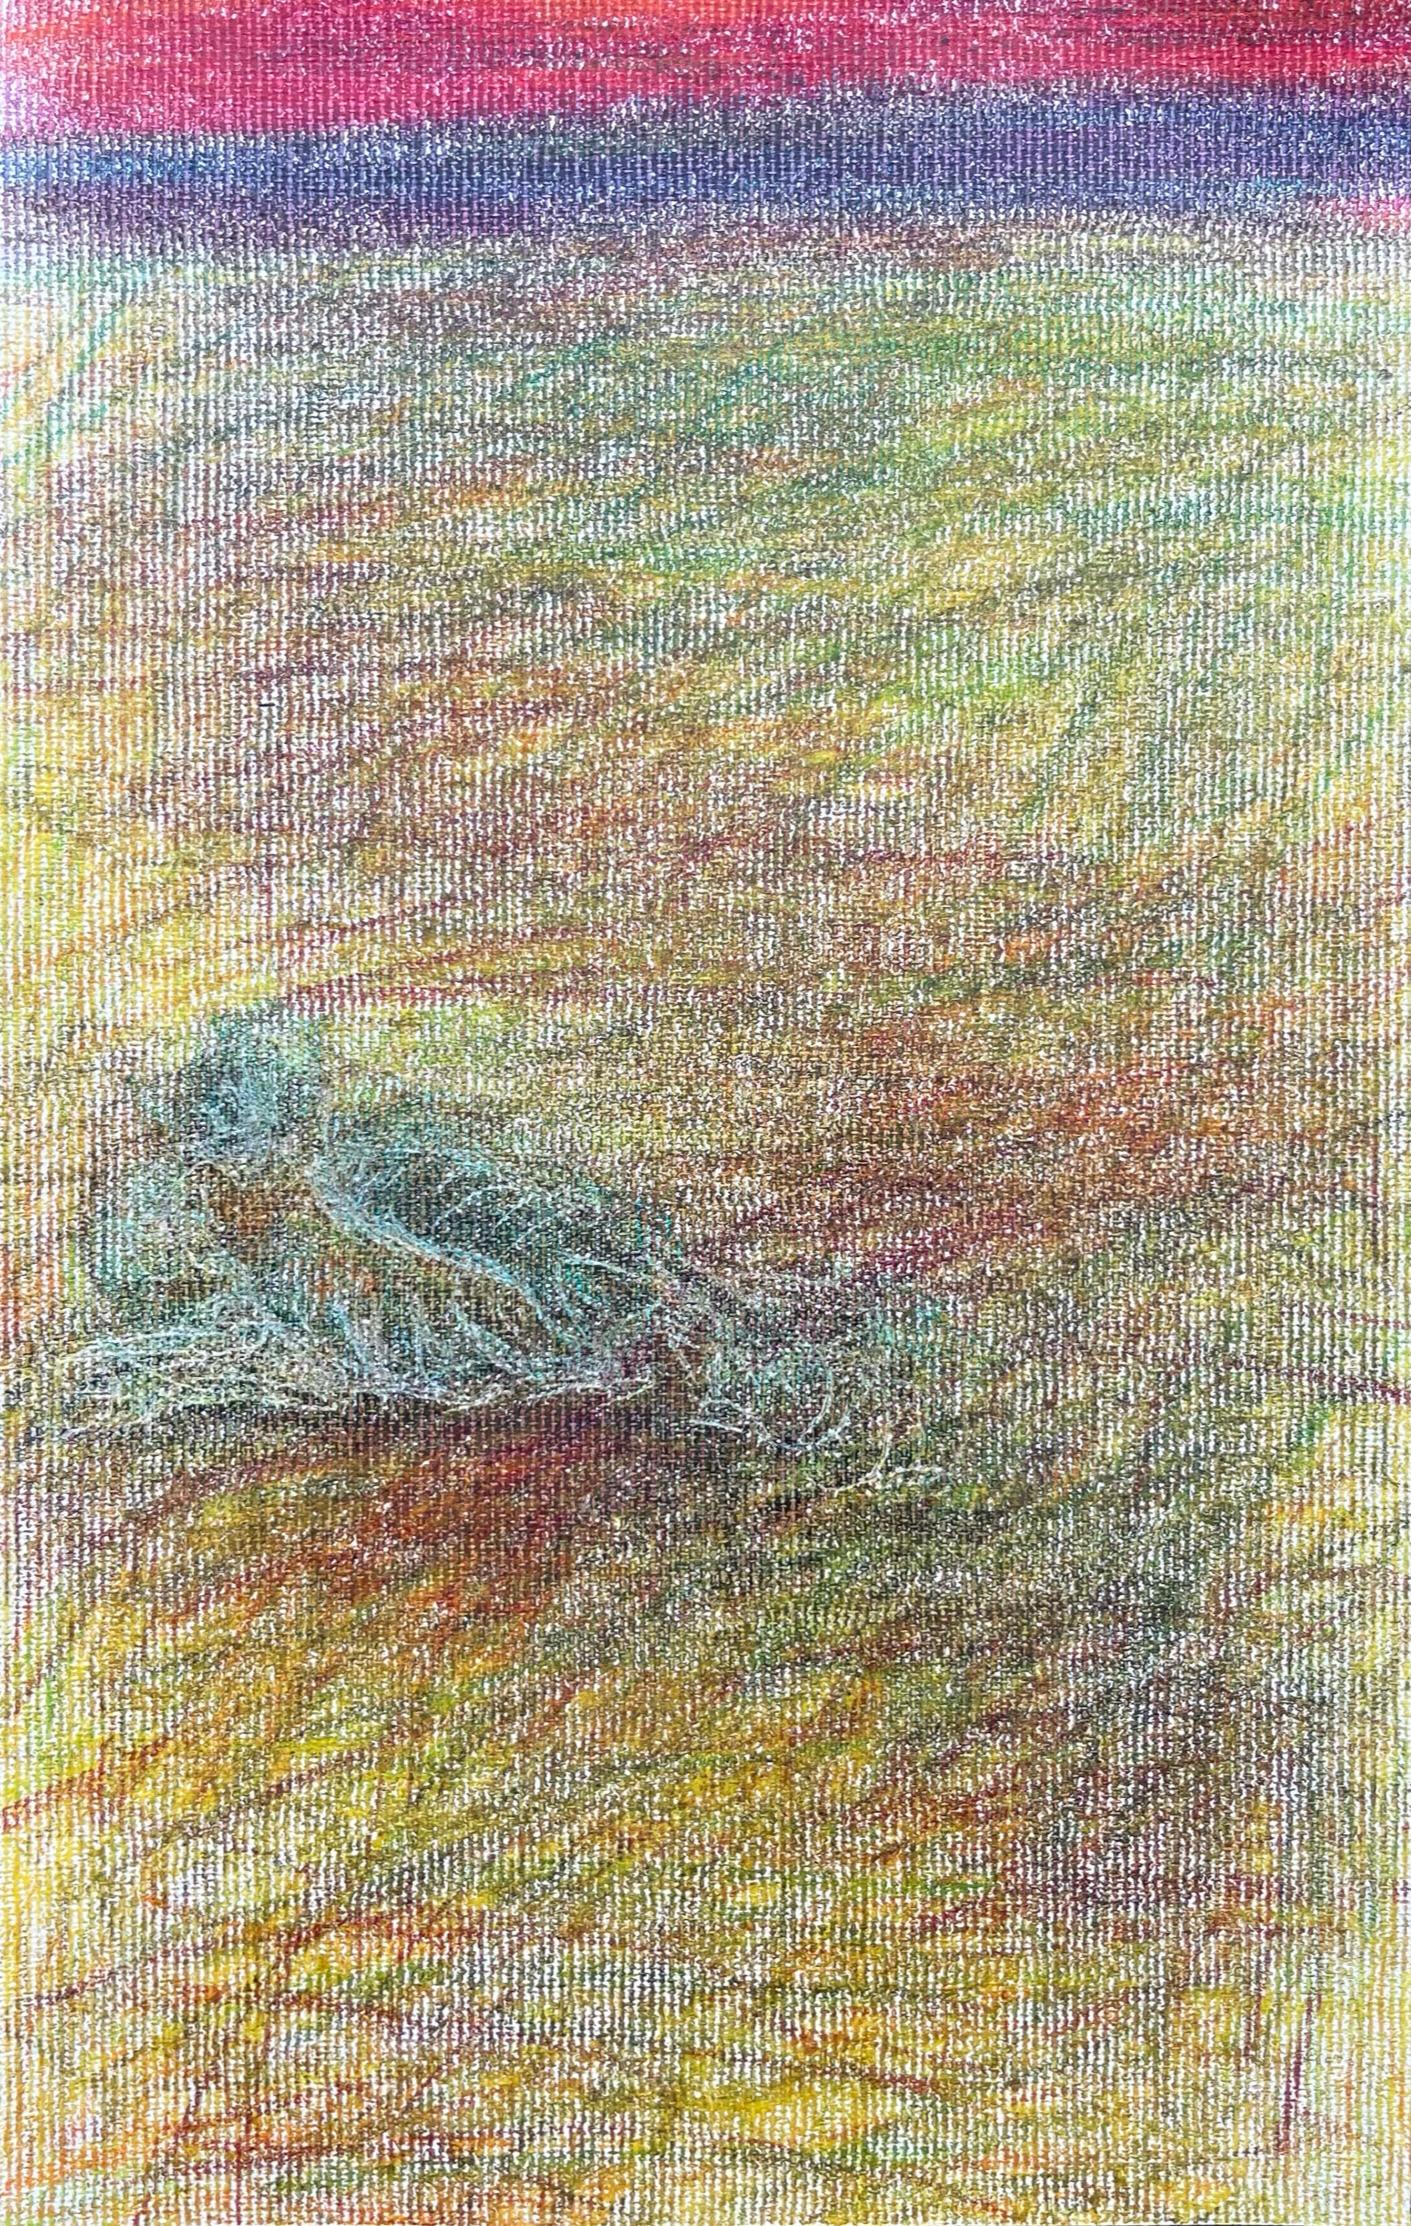 Zsolt Berszán Figurative Art - Body in the Field #11 - Landscape, Coloured Pencil, 21st Century, Red, Blue